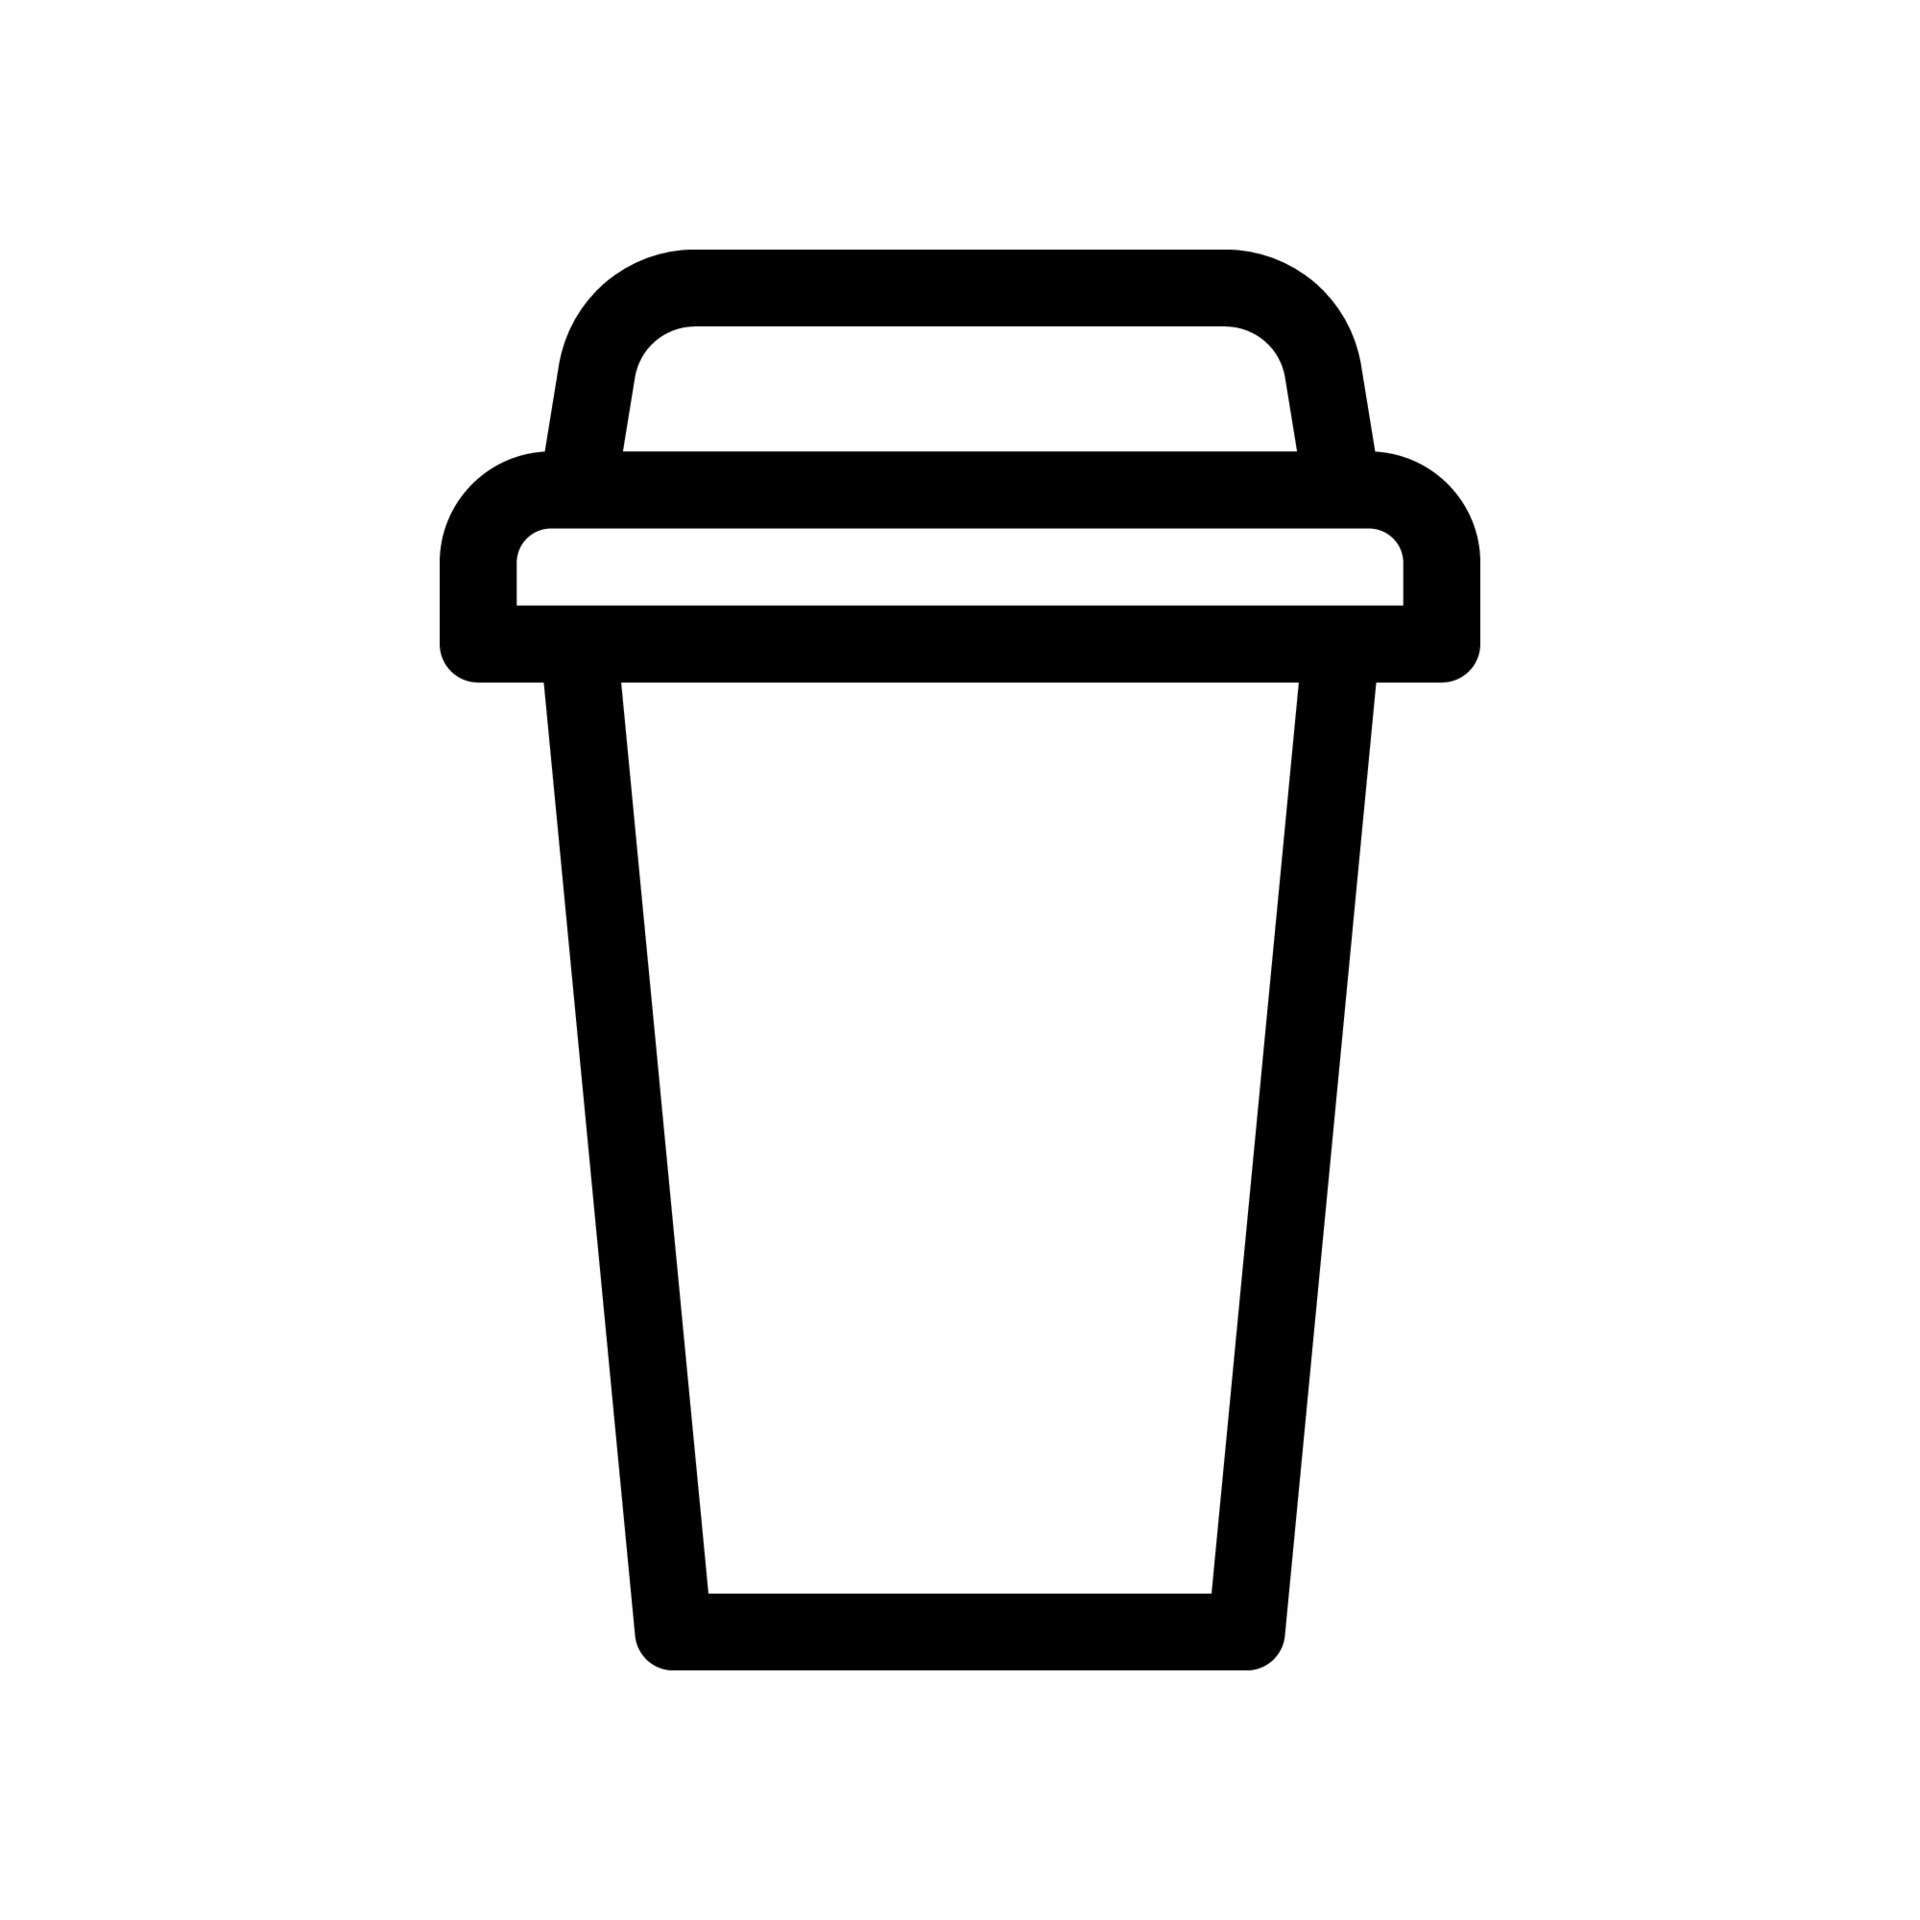 vector simple de icono de taza termo de metal. taza de café 17325408 Vector  en Vecteezy